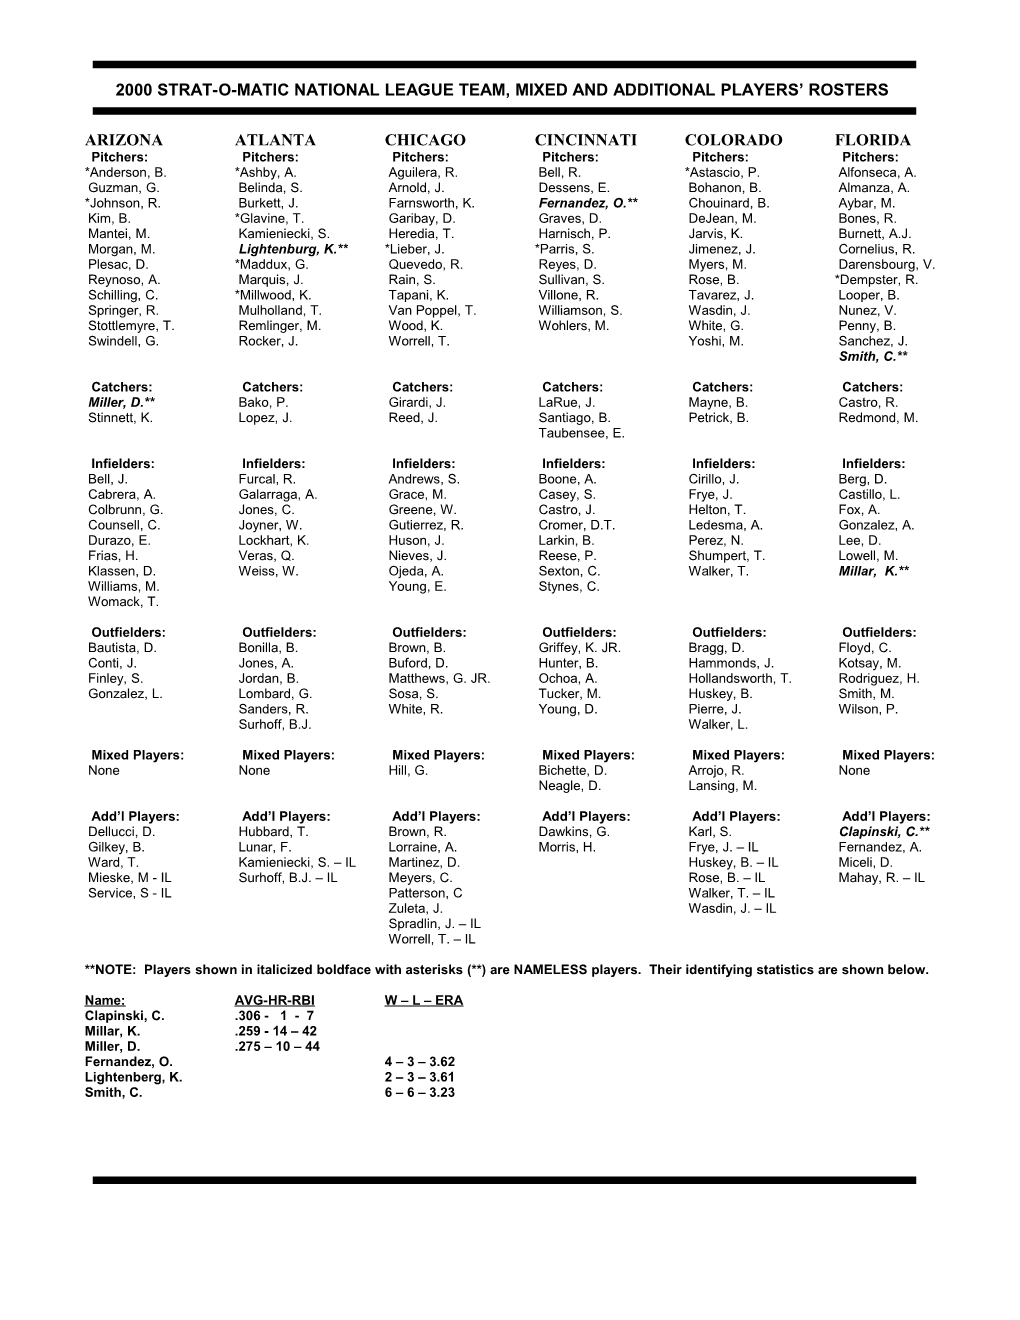 1962 Strat-O-Matic 20 Team Baseball Rosters